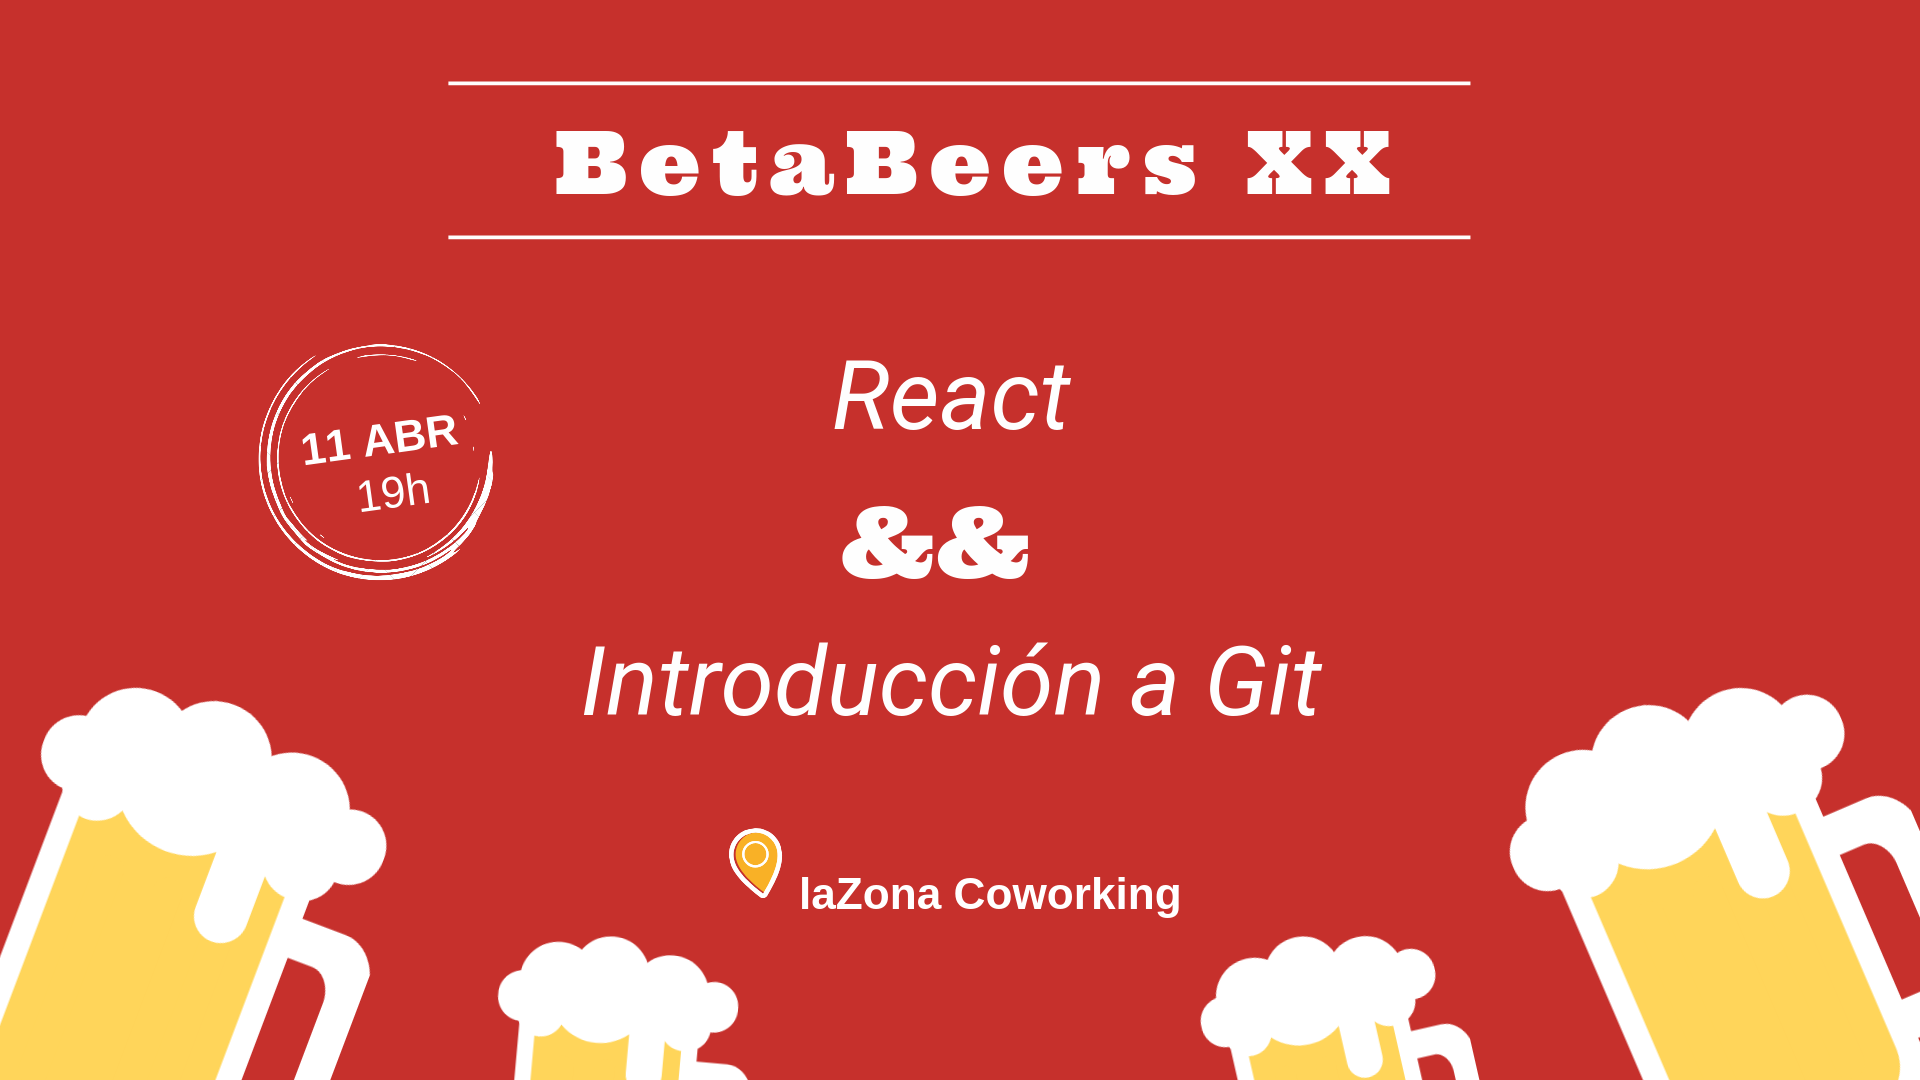 Betabeers XX: React && Introducción a Git